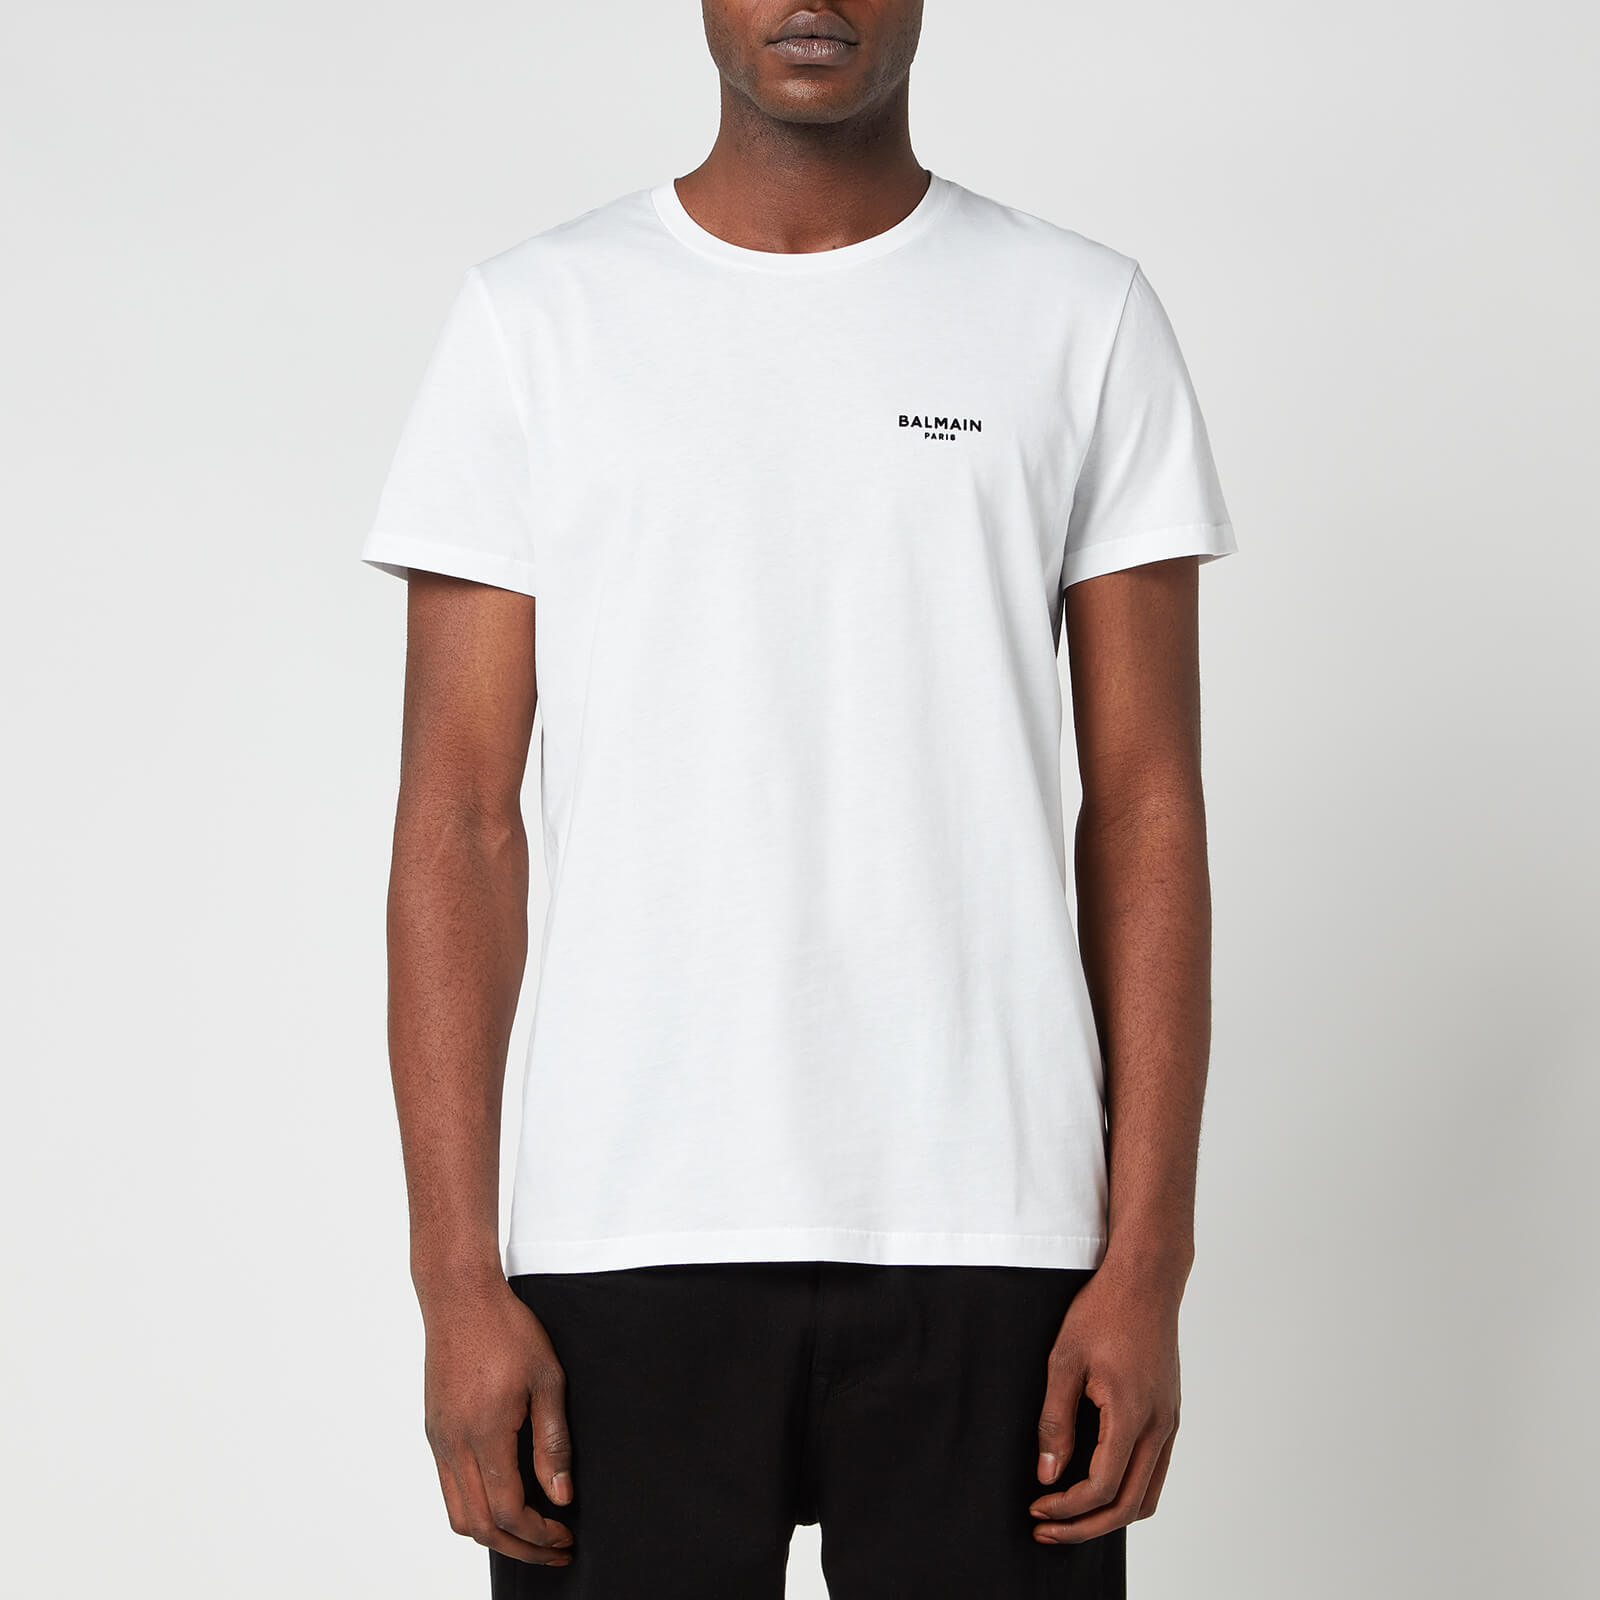 Balmain Men's Small Flock T-Shirt - White/Black - S